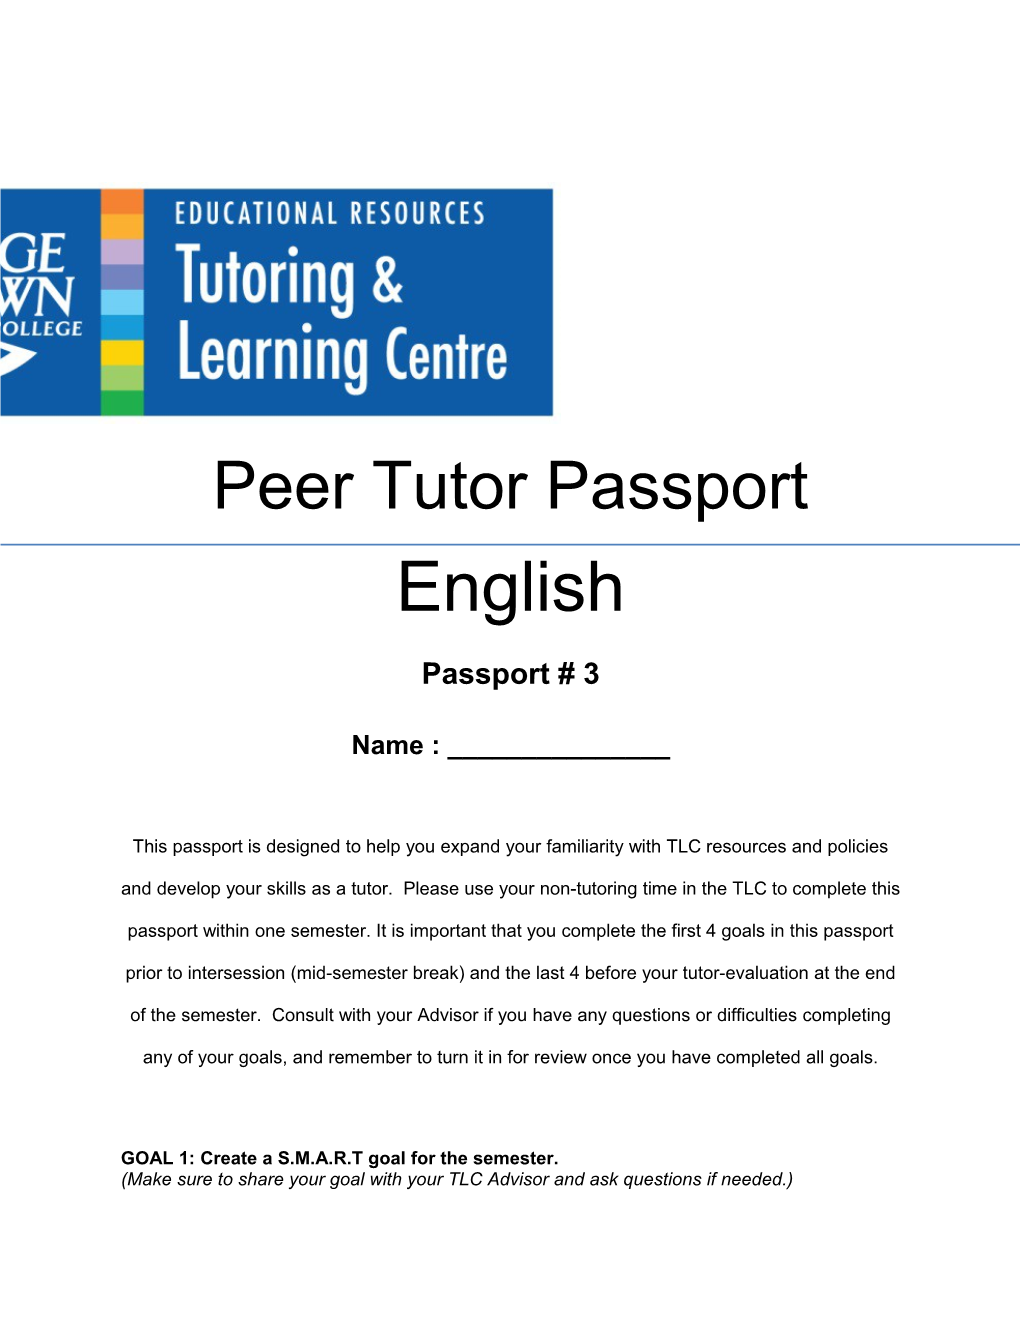 Peer Tutor Passport